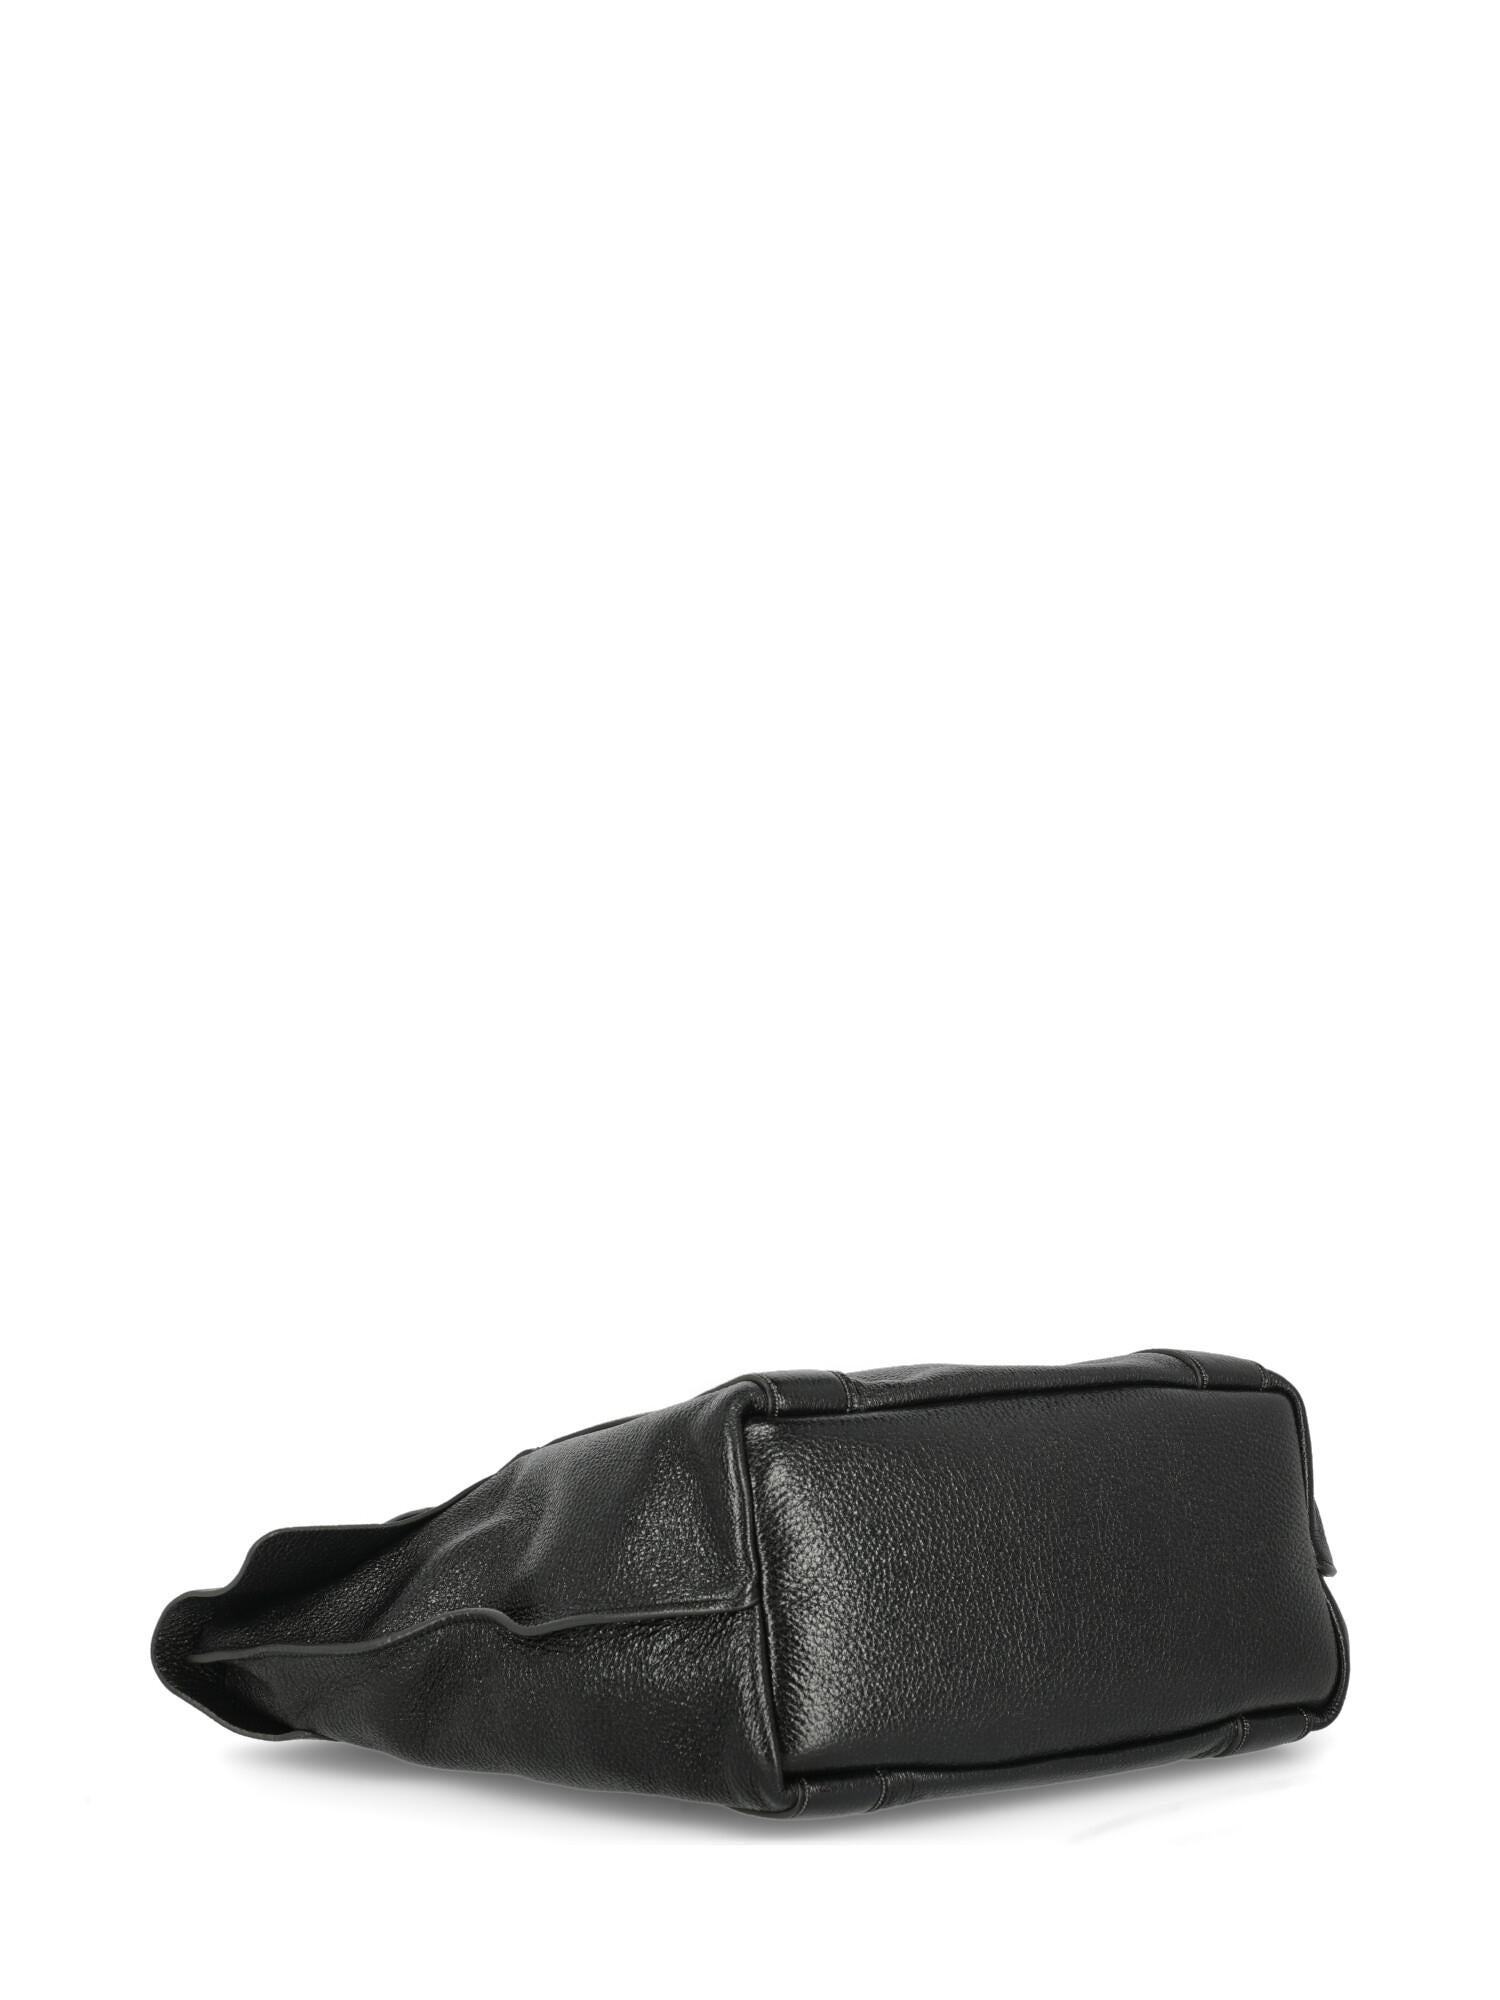 Brunello Cucinelli Woman Shoulder bag  Black Leather 1